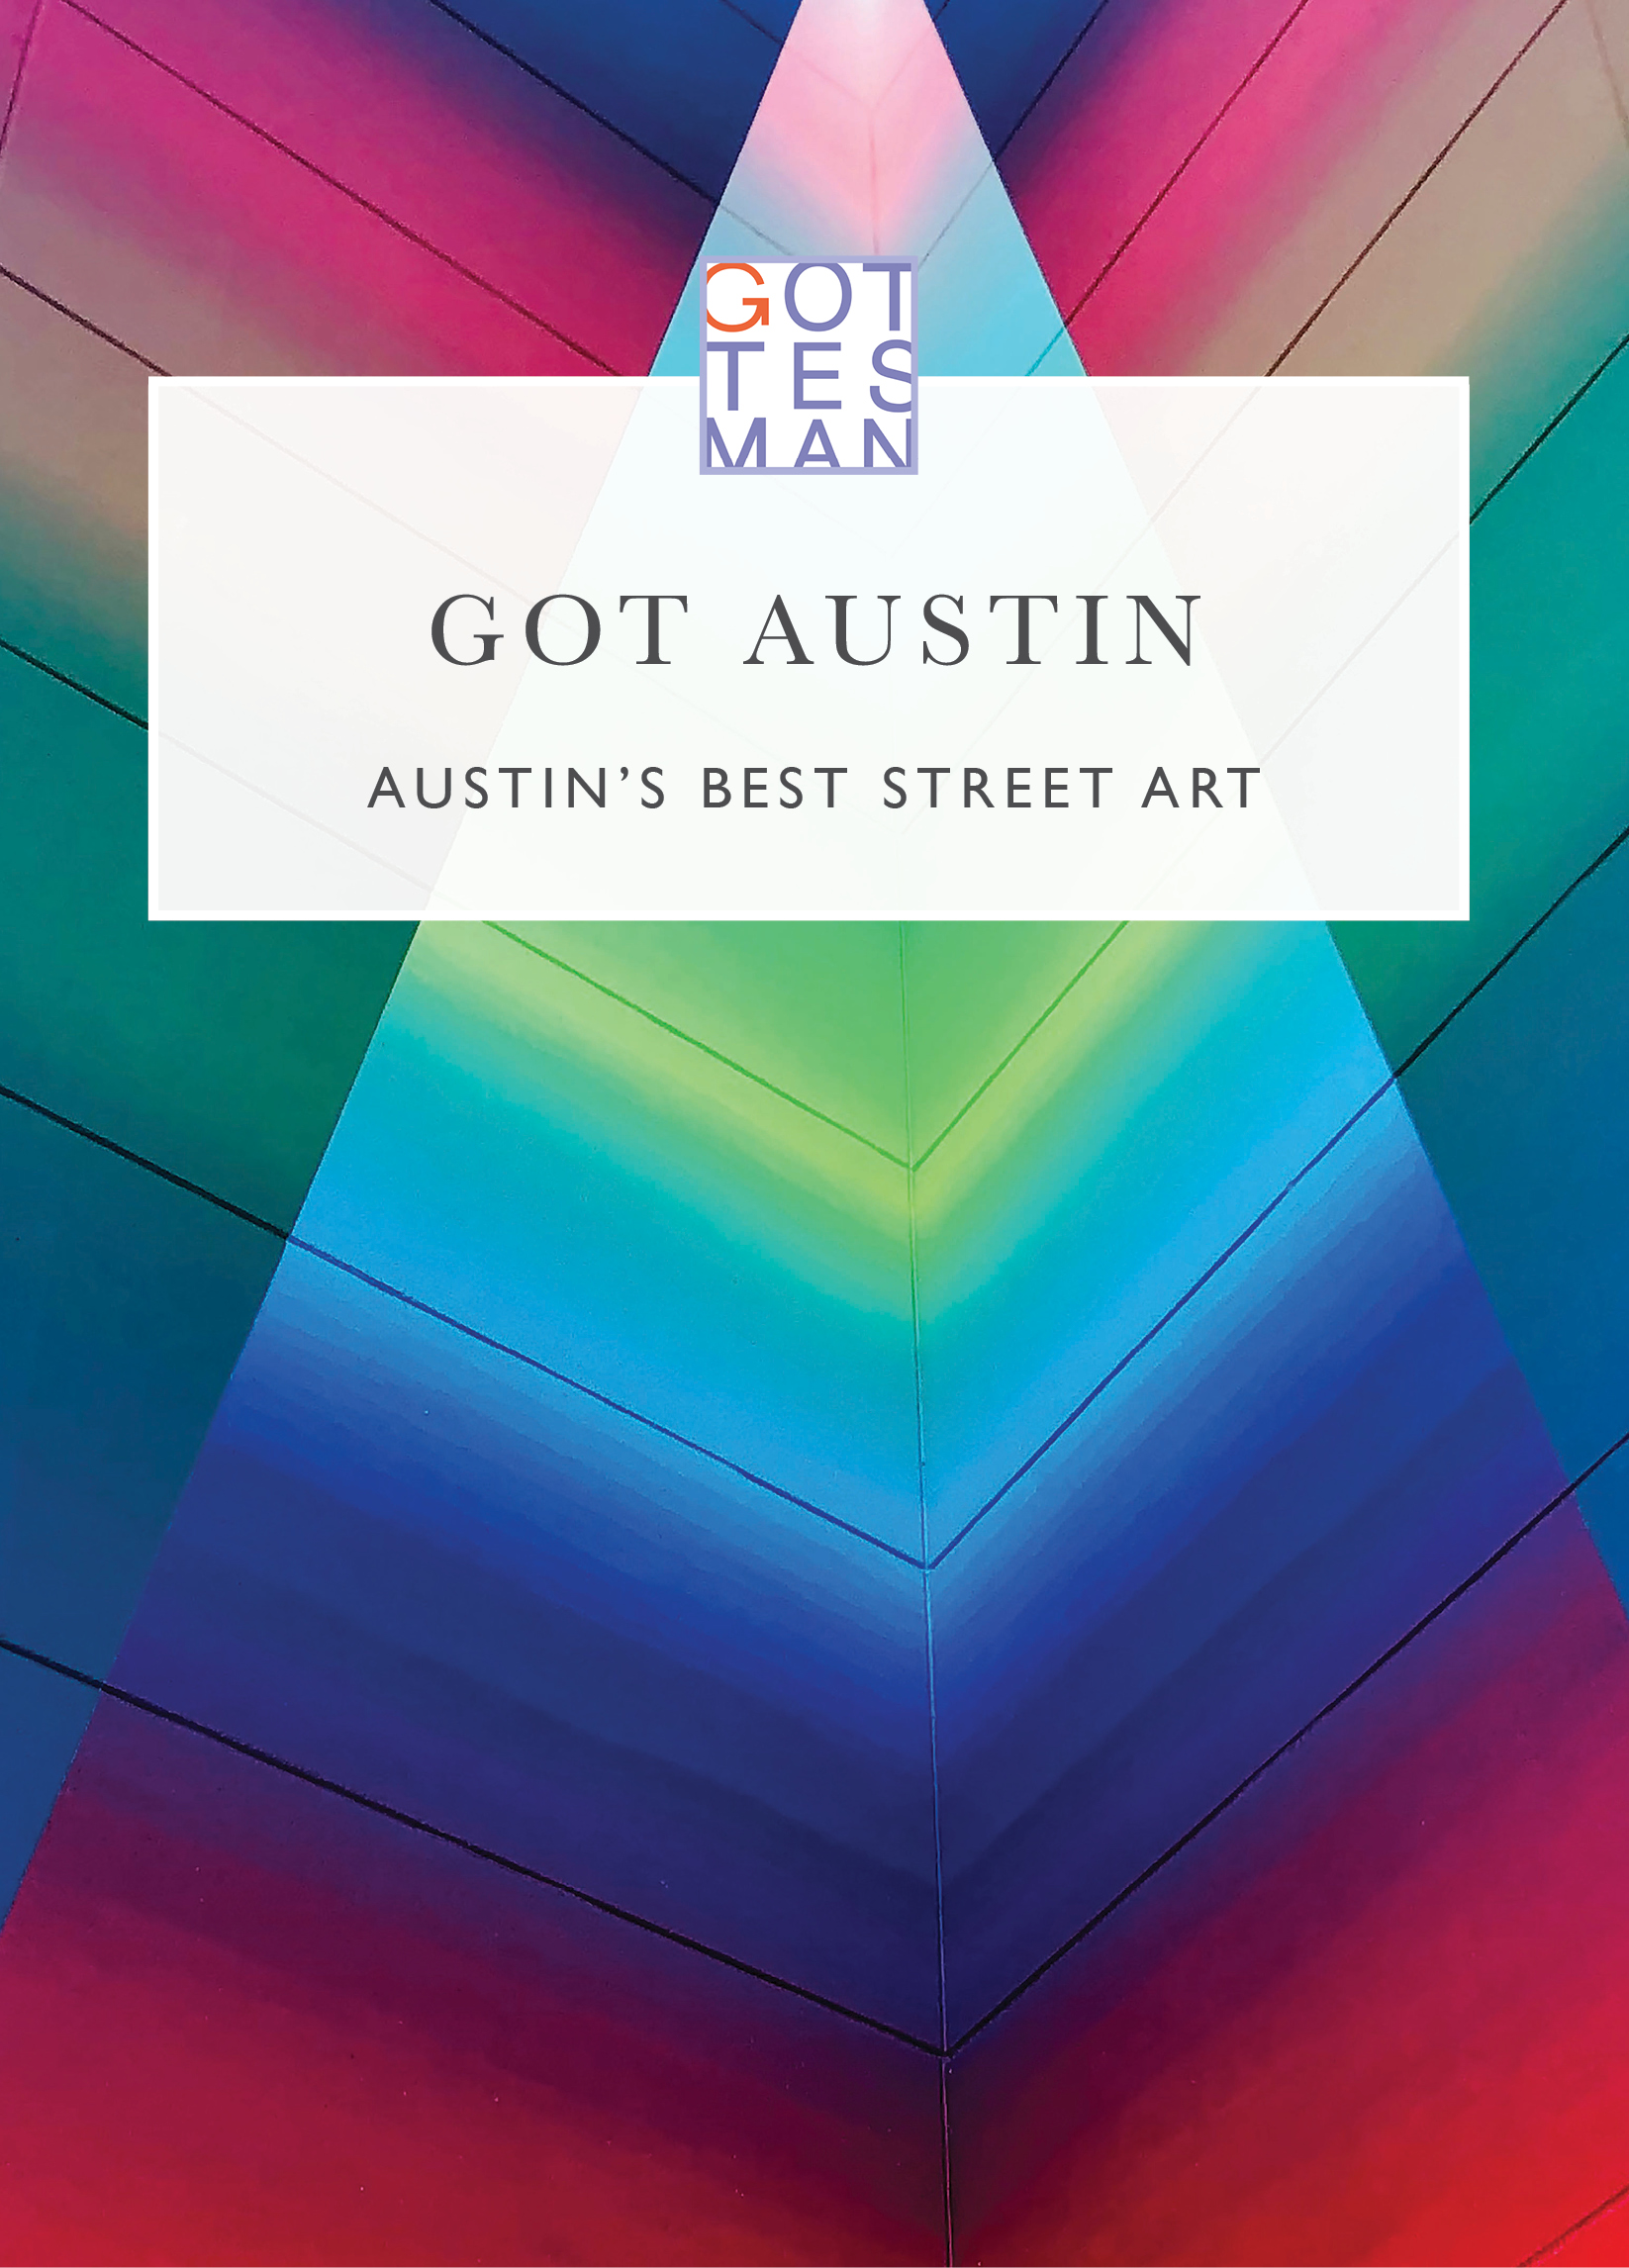 Building are with text overlay, "Got Austin: Austin's Best Street Art"